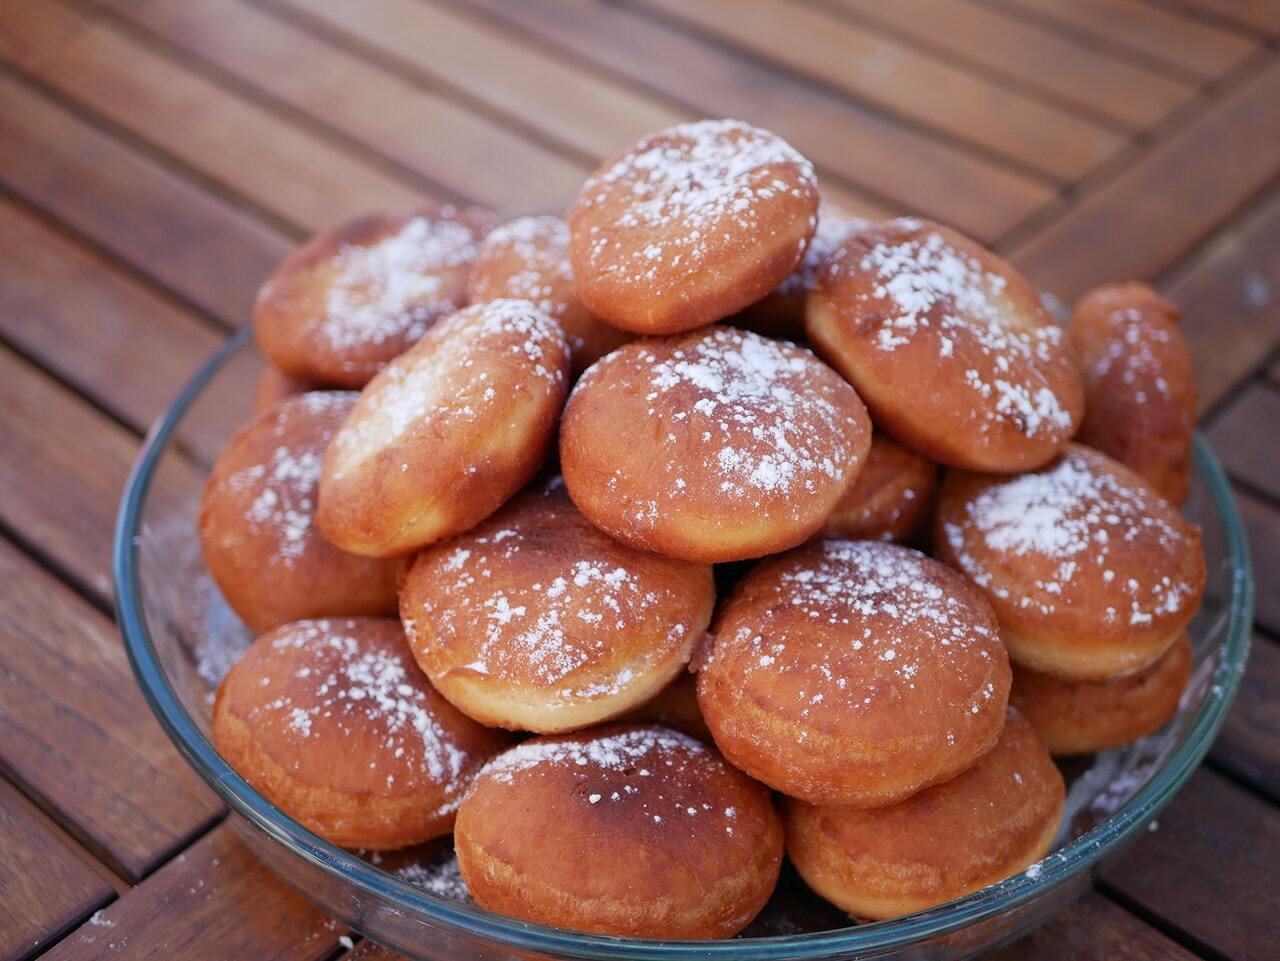 Fatty donuts with powdered sugar